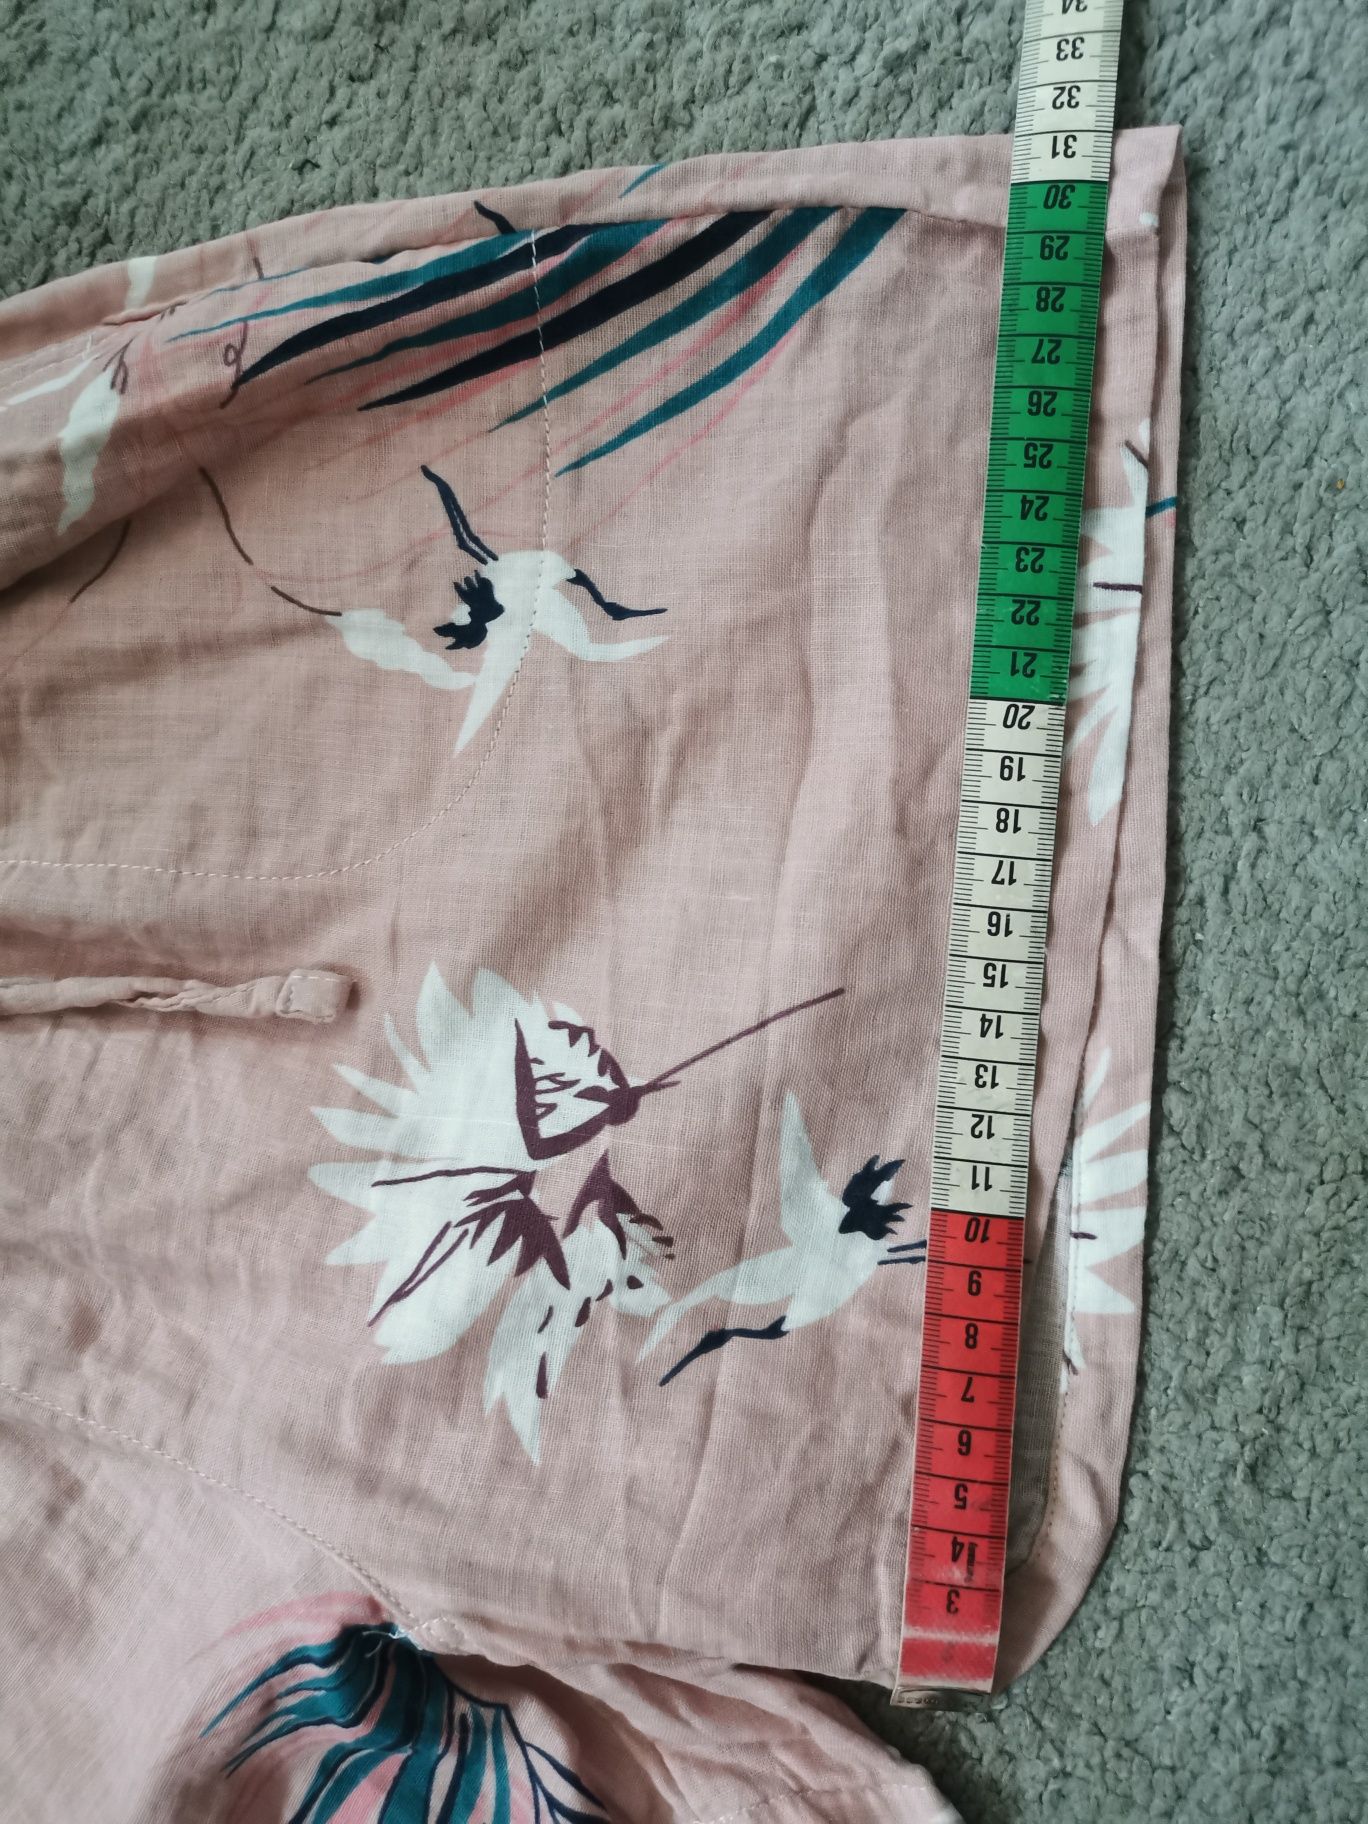 Spodnie Spodenki krótkie do spania różowe liście rozmiar S M L